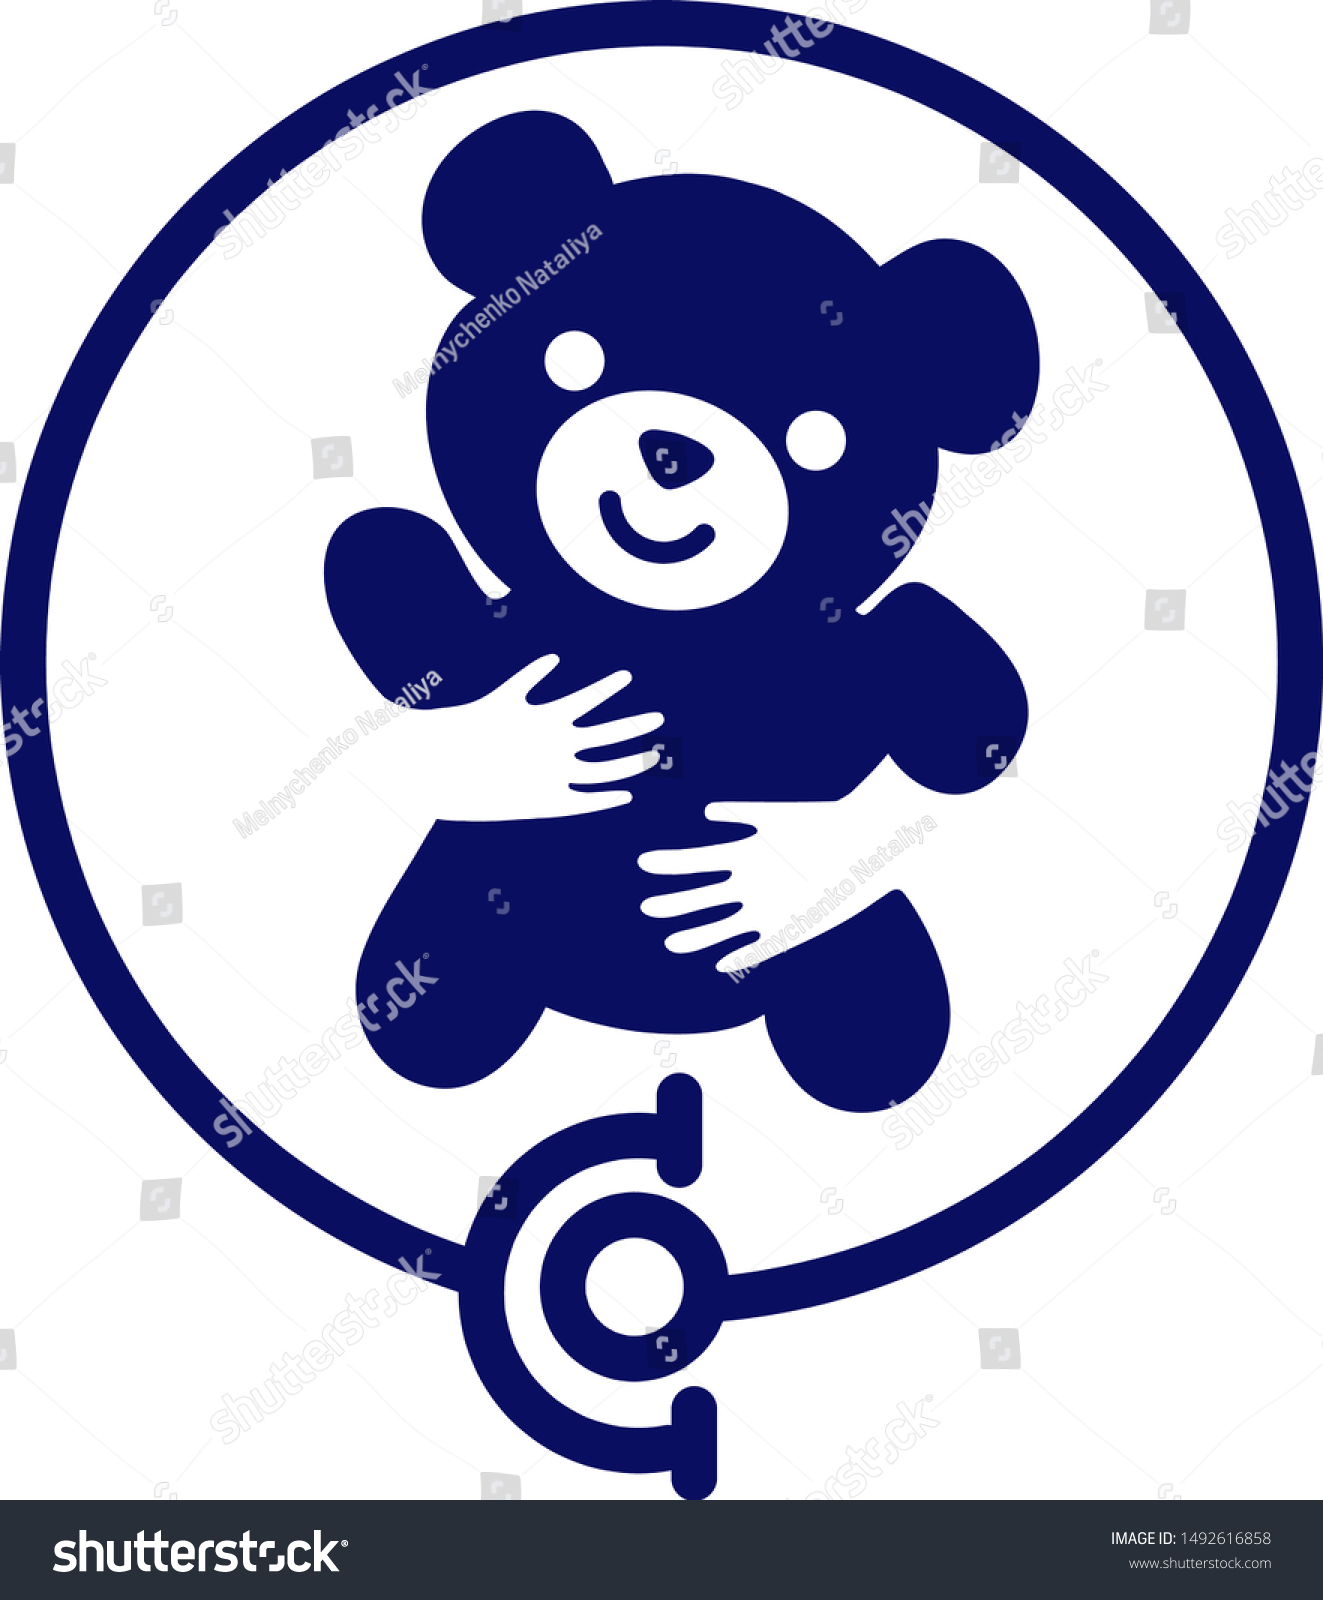 teddy bear with love symbol